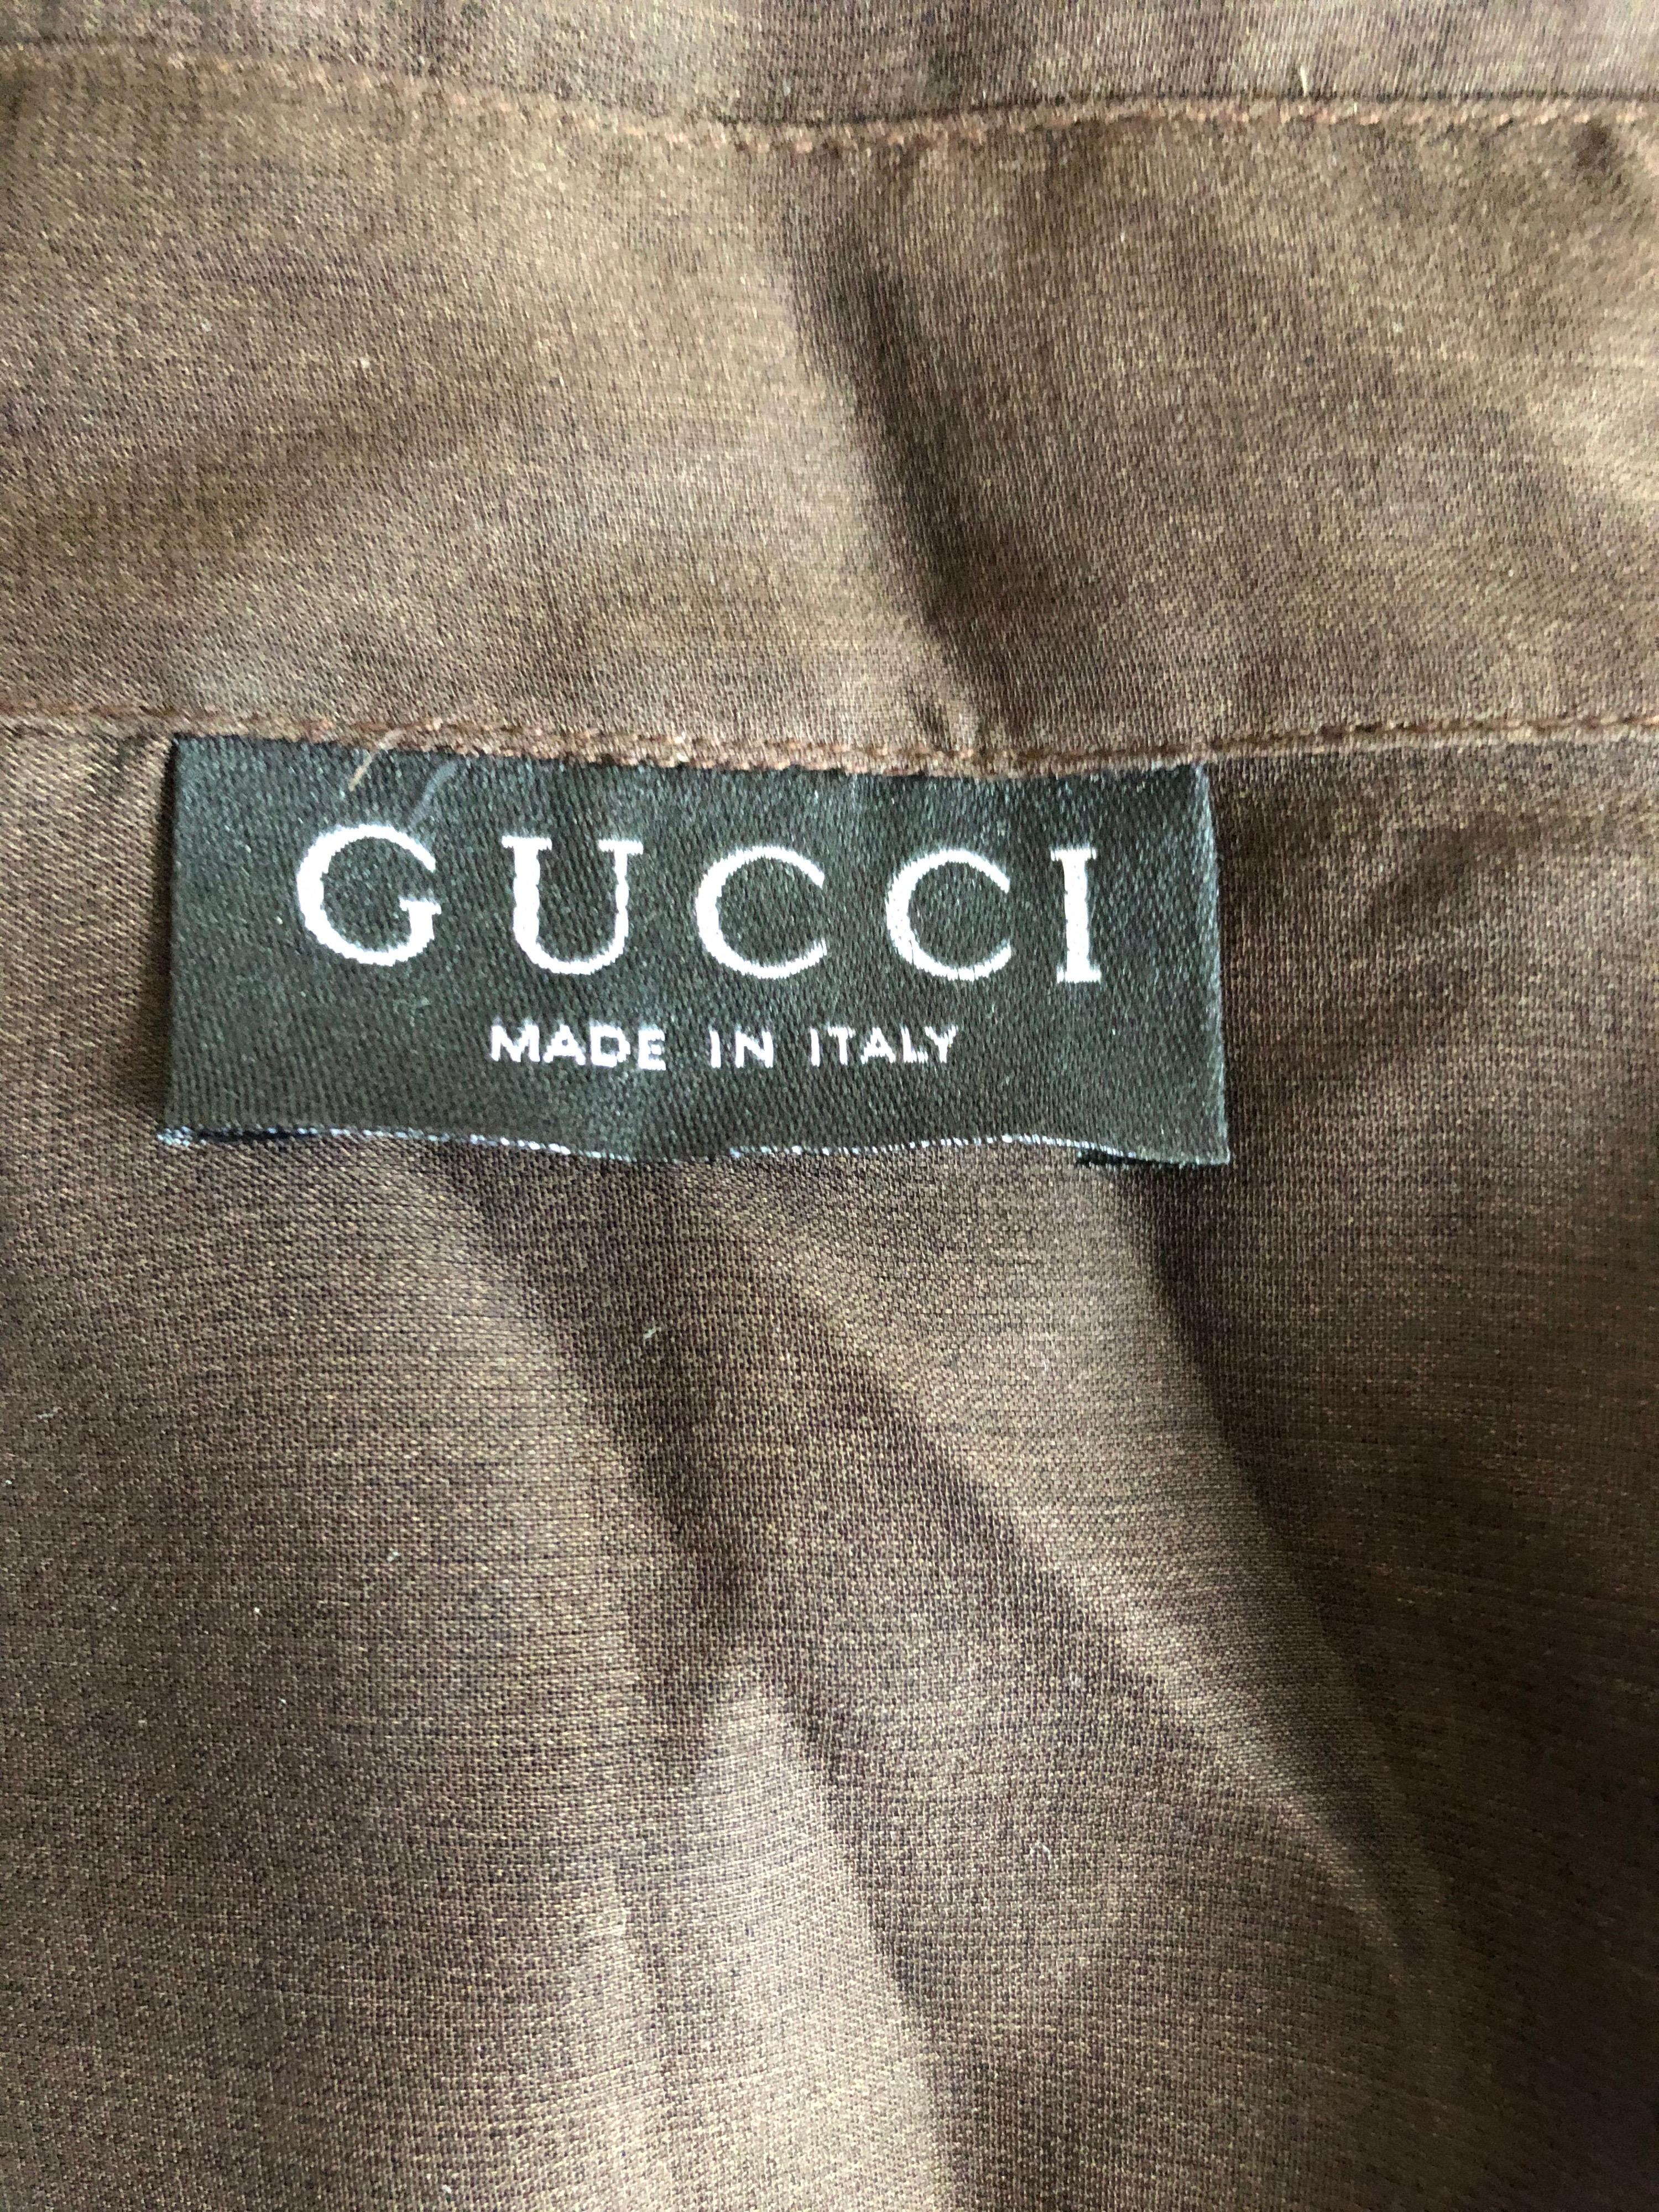 Gucci by Tom Ford 1997 Vintage Braun & Blau Ombre Seiden-Tunika im Angebot 4